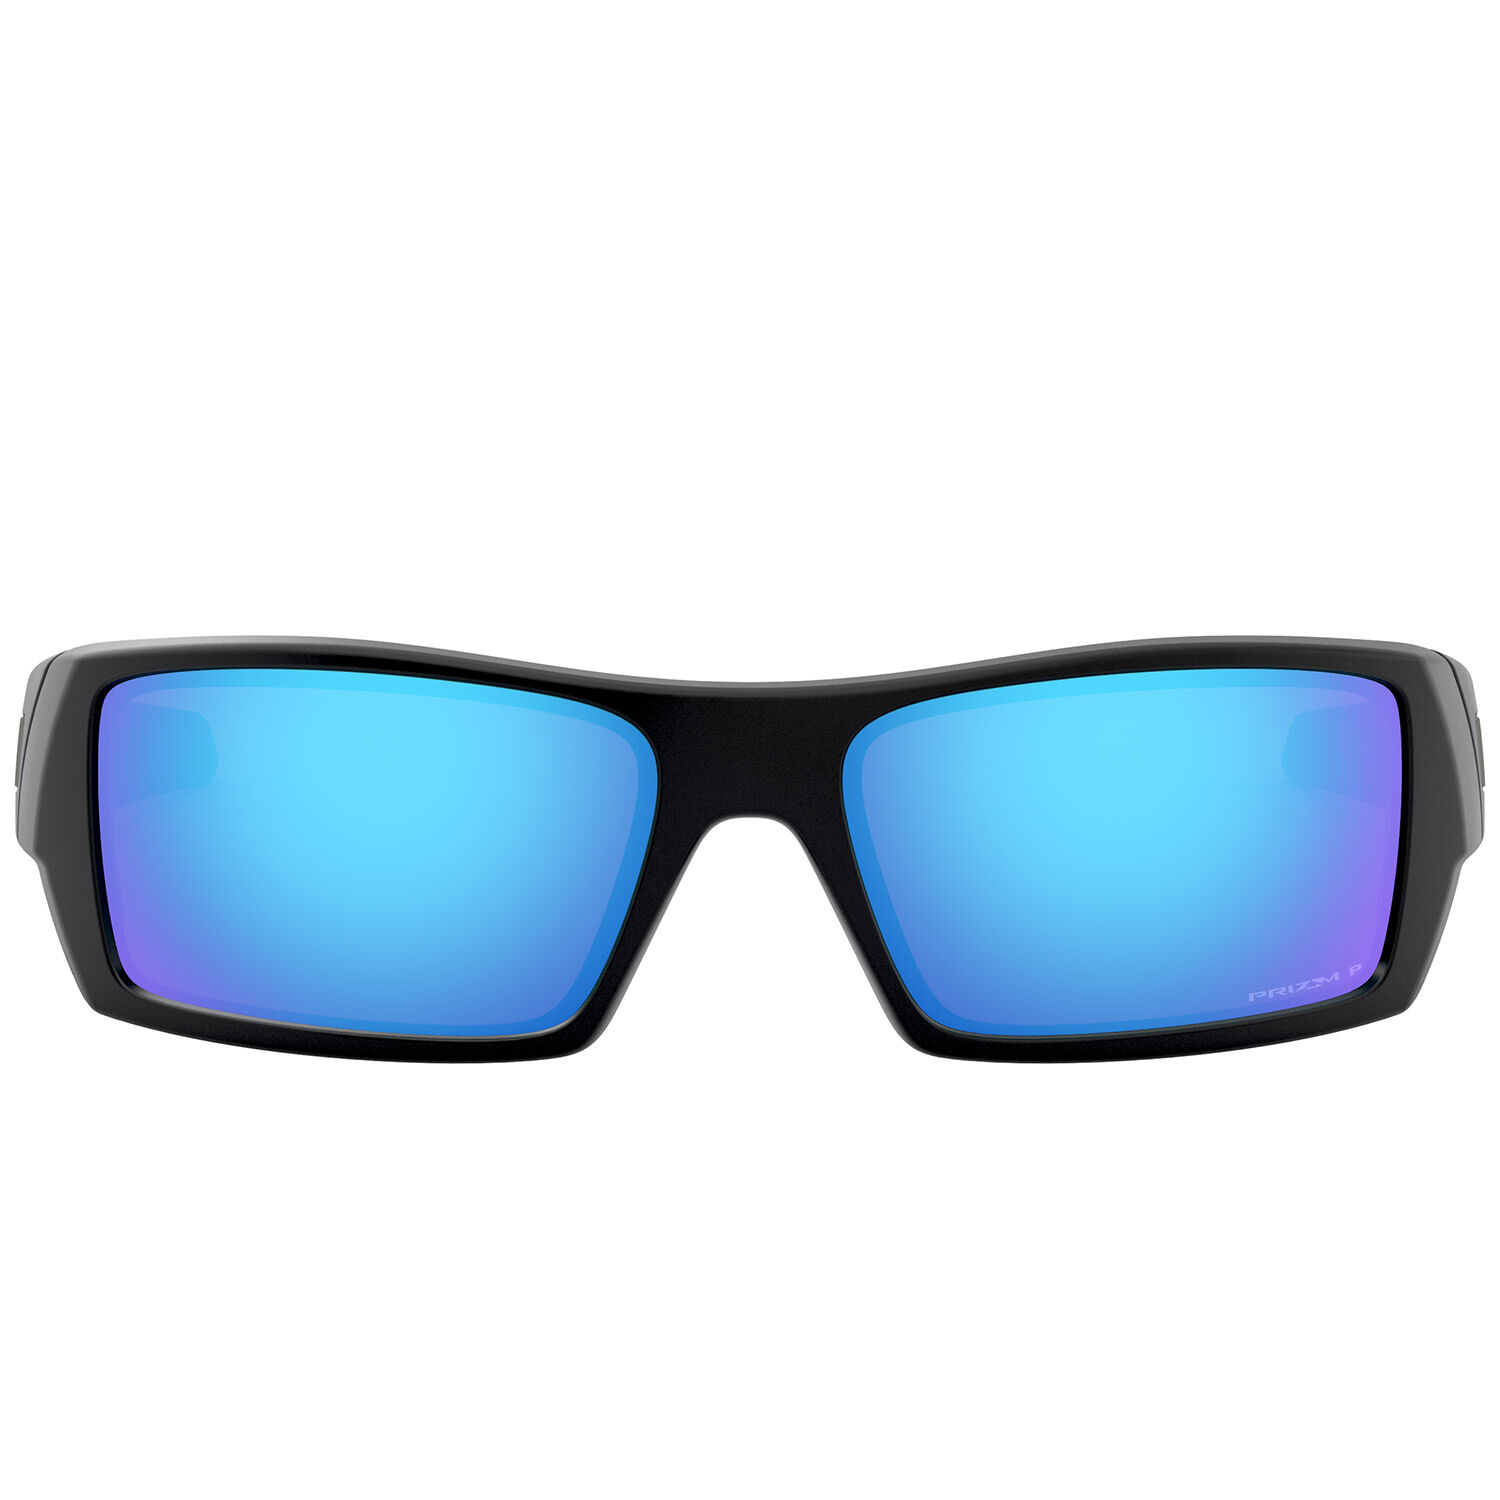 Oakley SI Gascan Sunglasses - Prescription Available - RX Safety